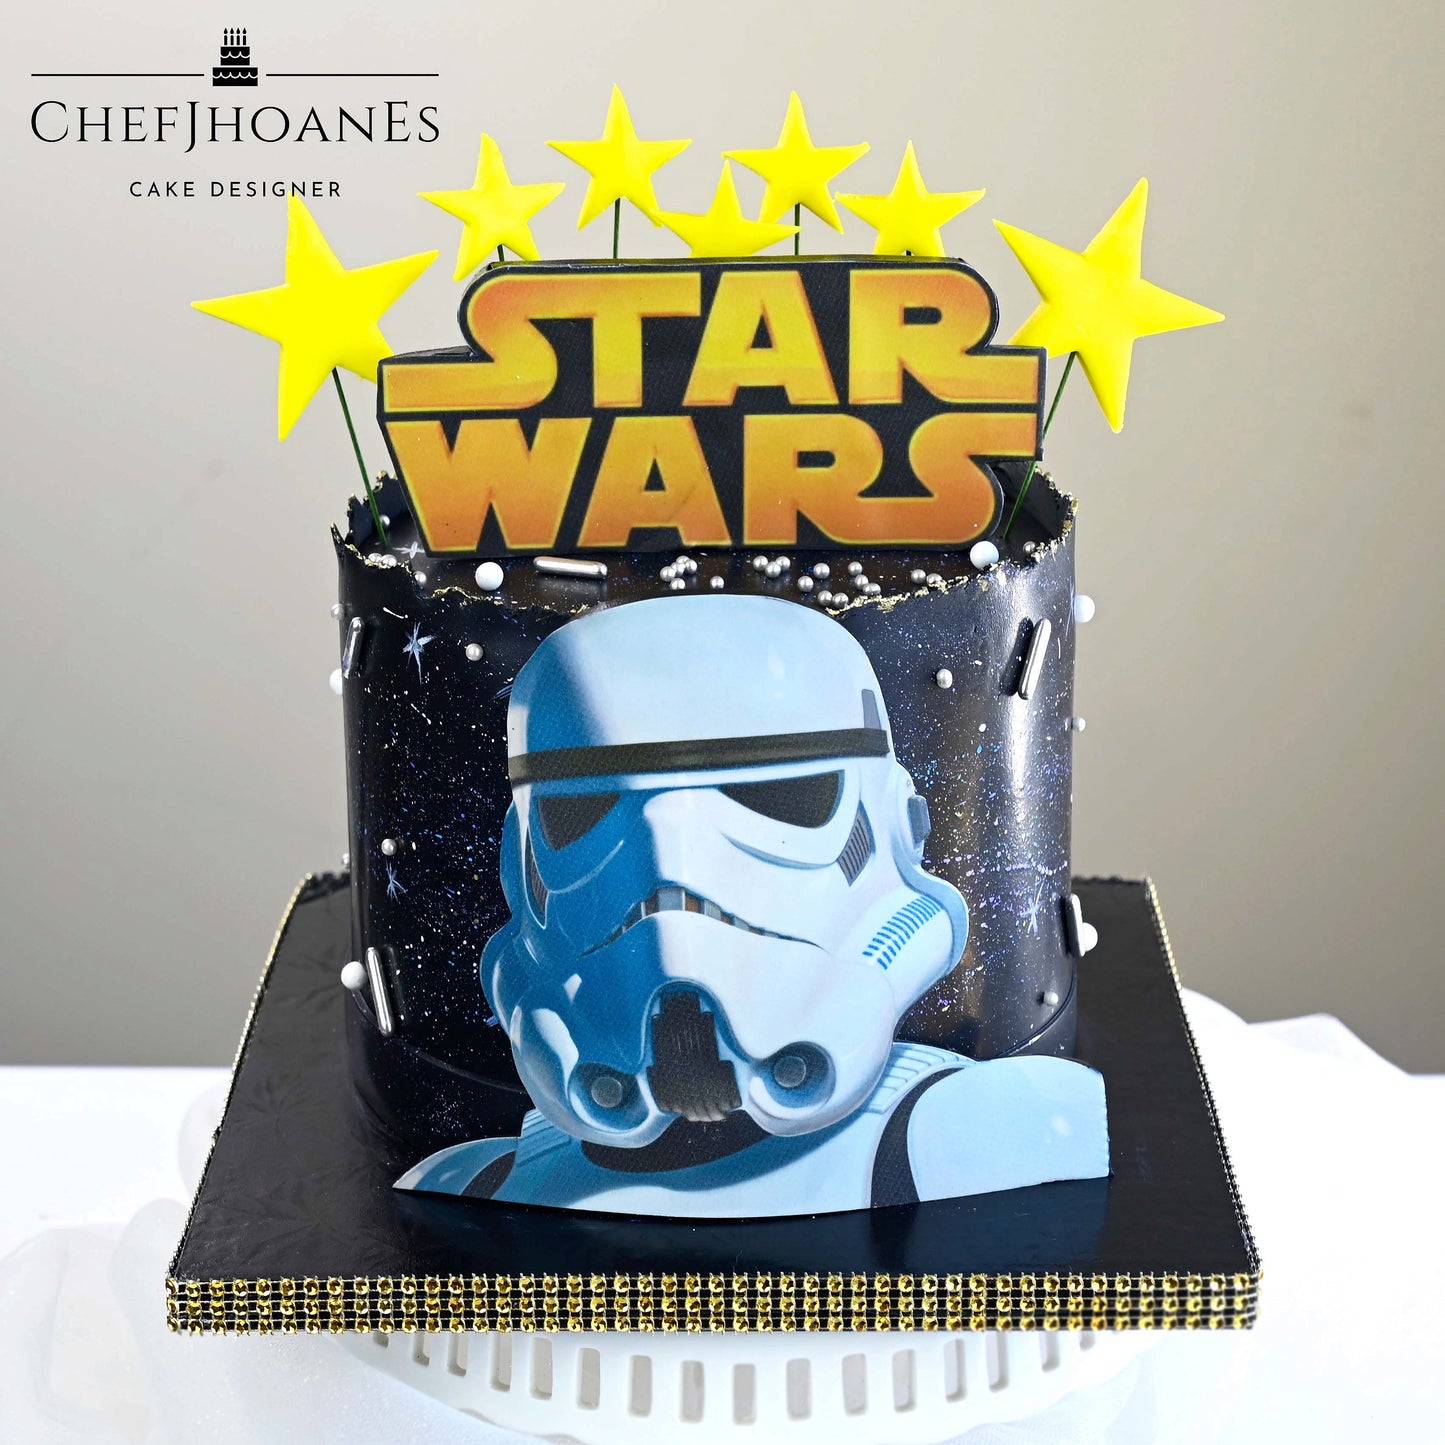 Star Wars cake. Feed 15 people.